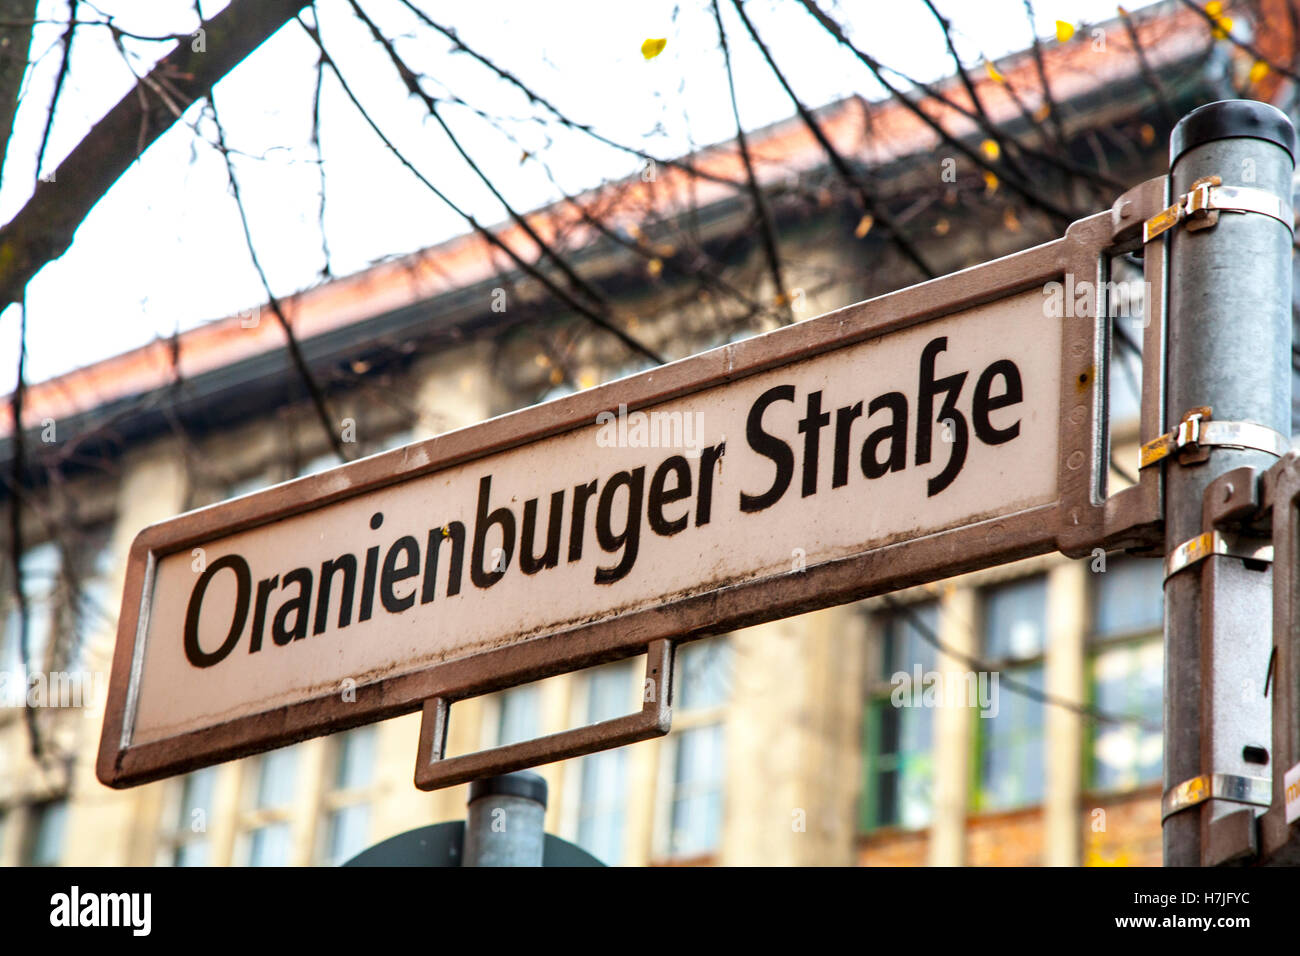 oranienburger straße street sign in Berlin Stock Photo